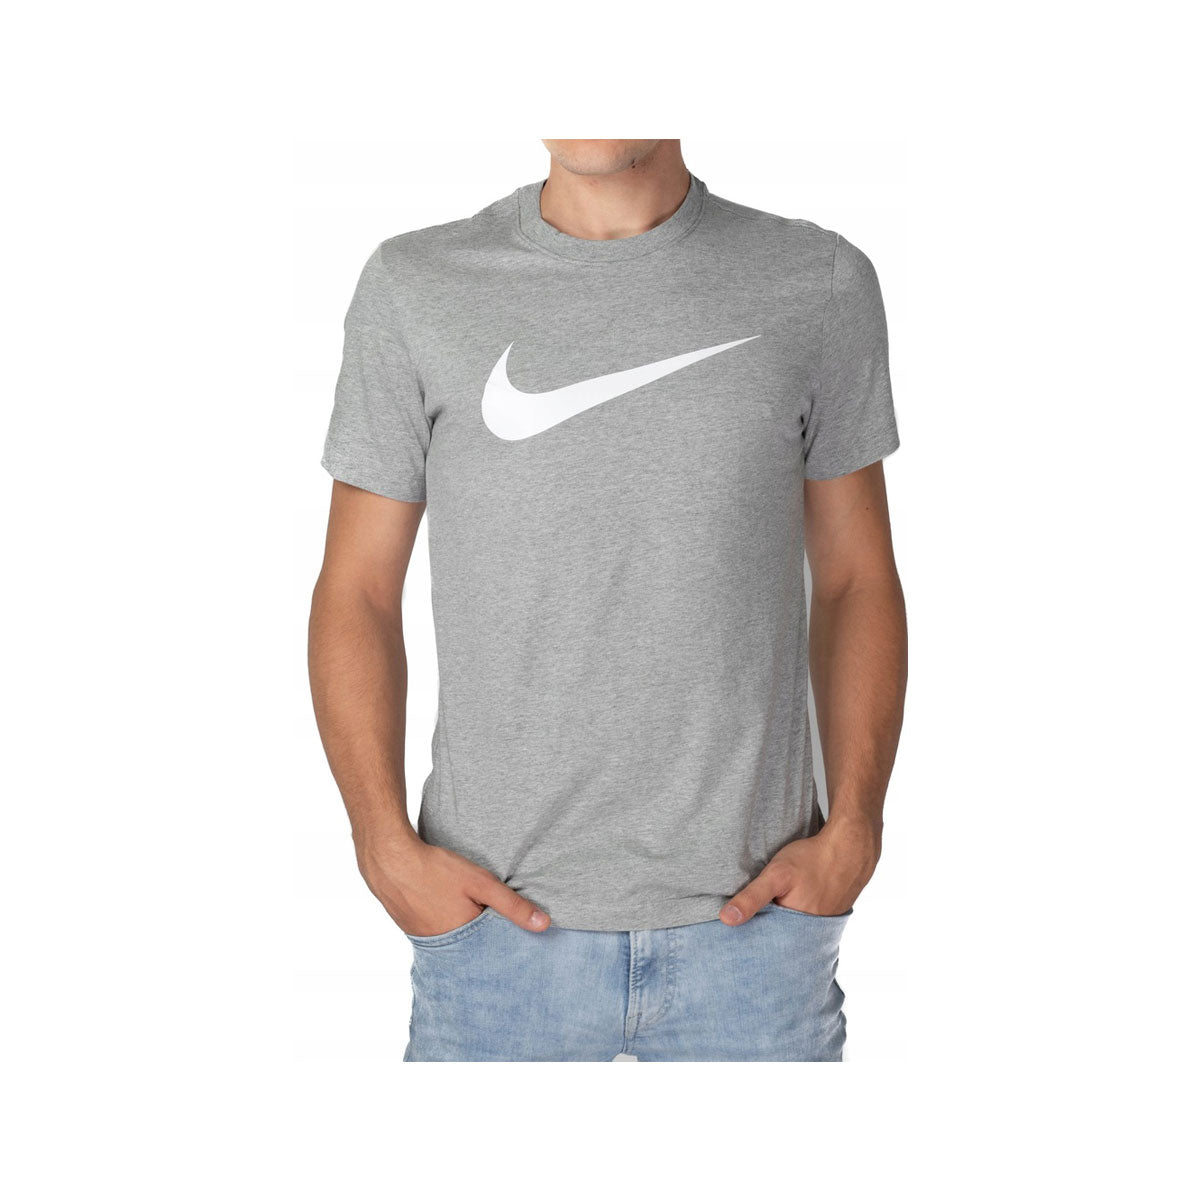 Nike Men's Swoosh T-Shirt - KickzStore